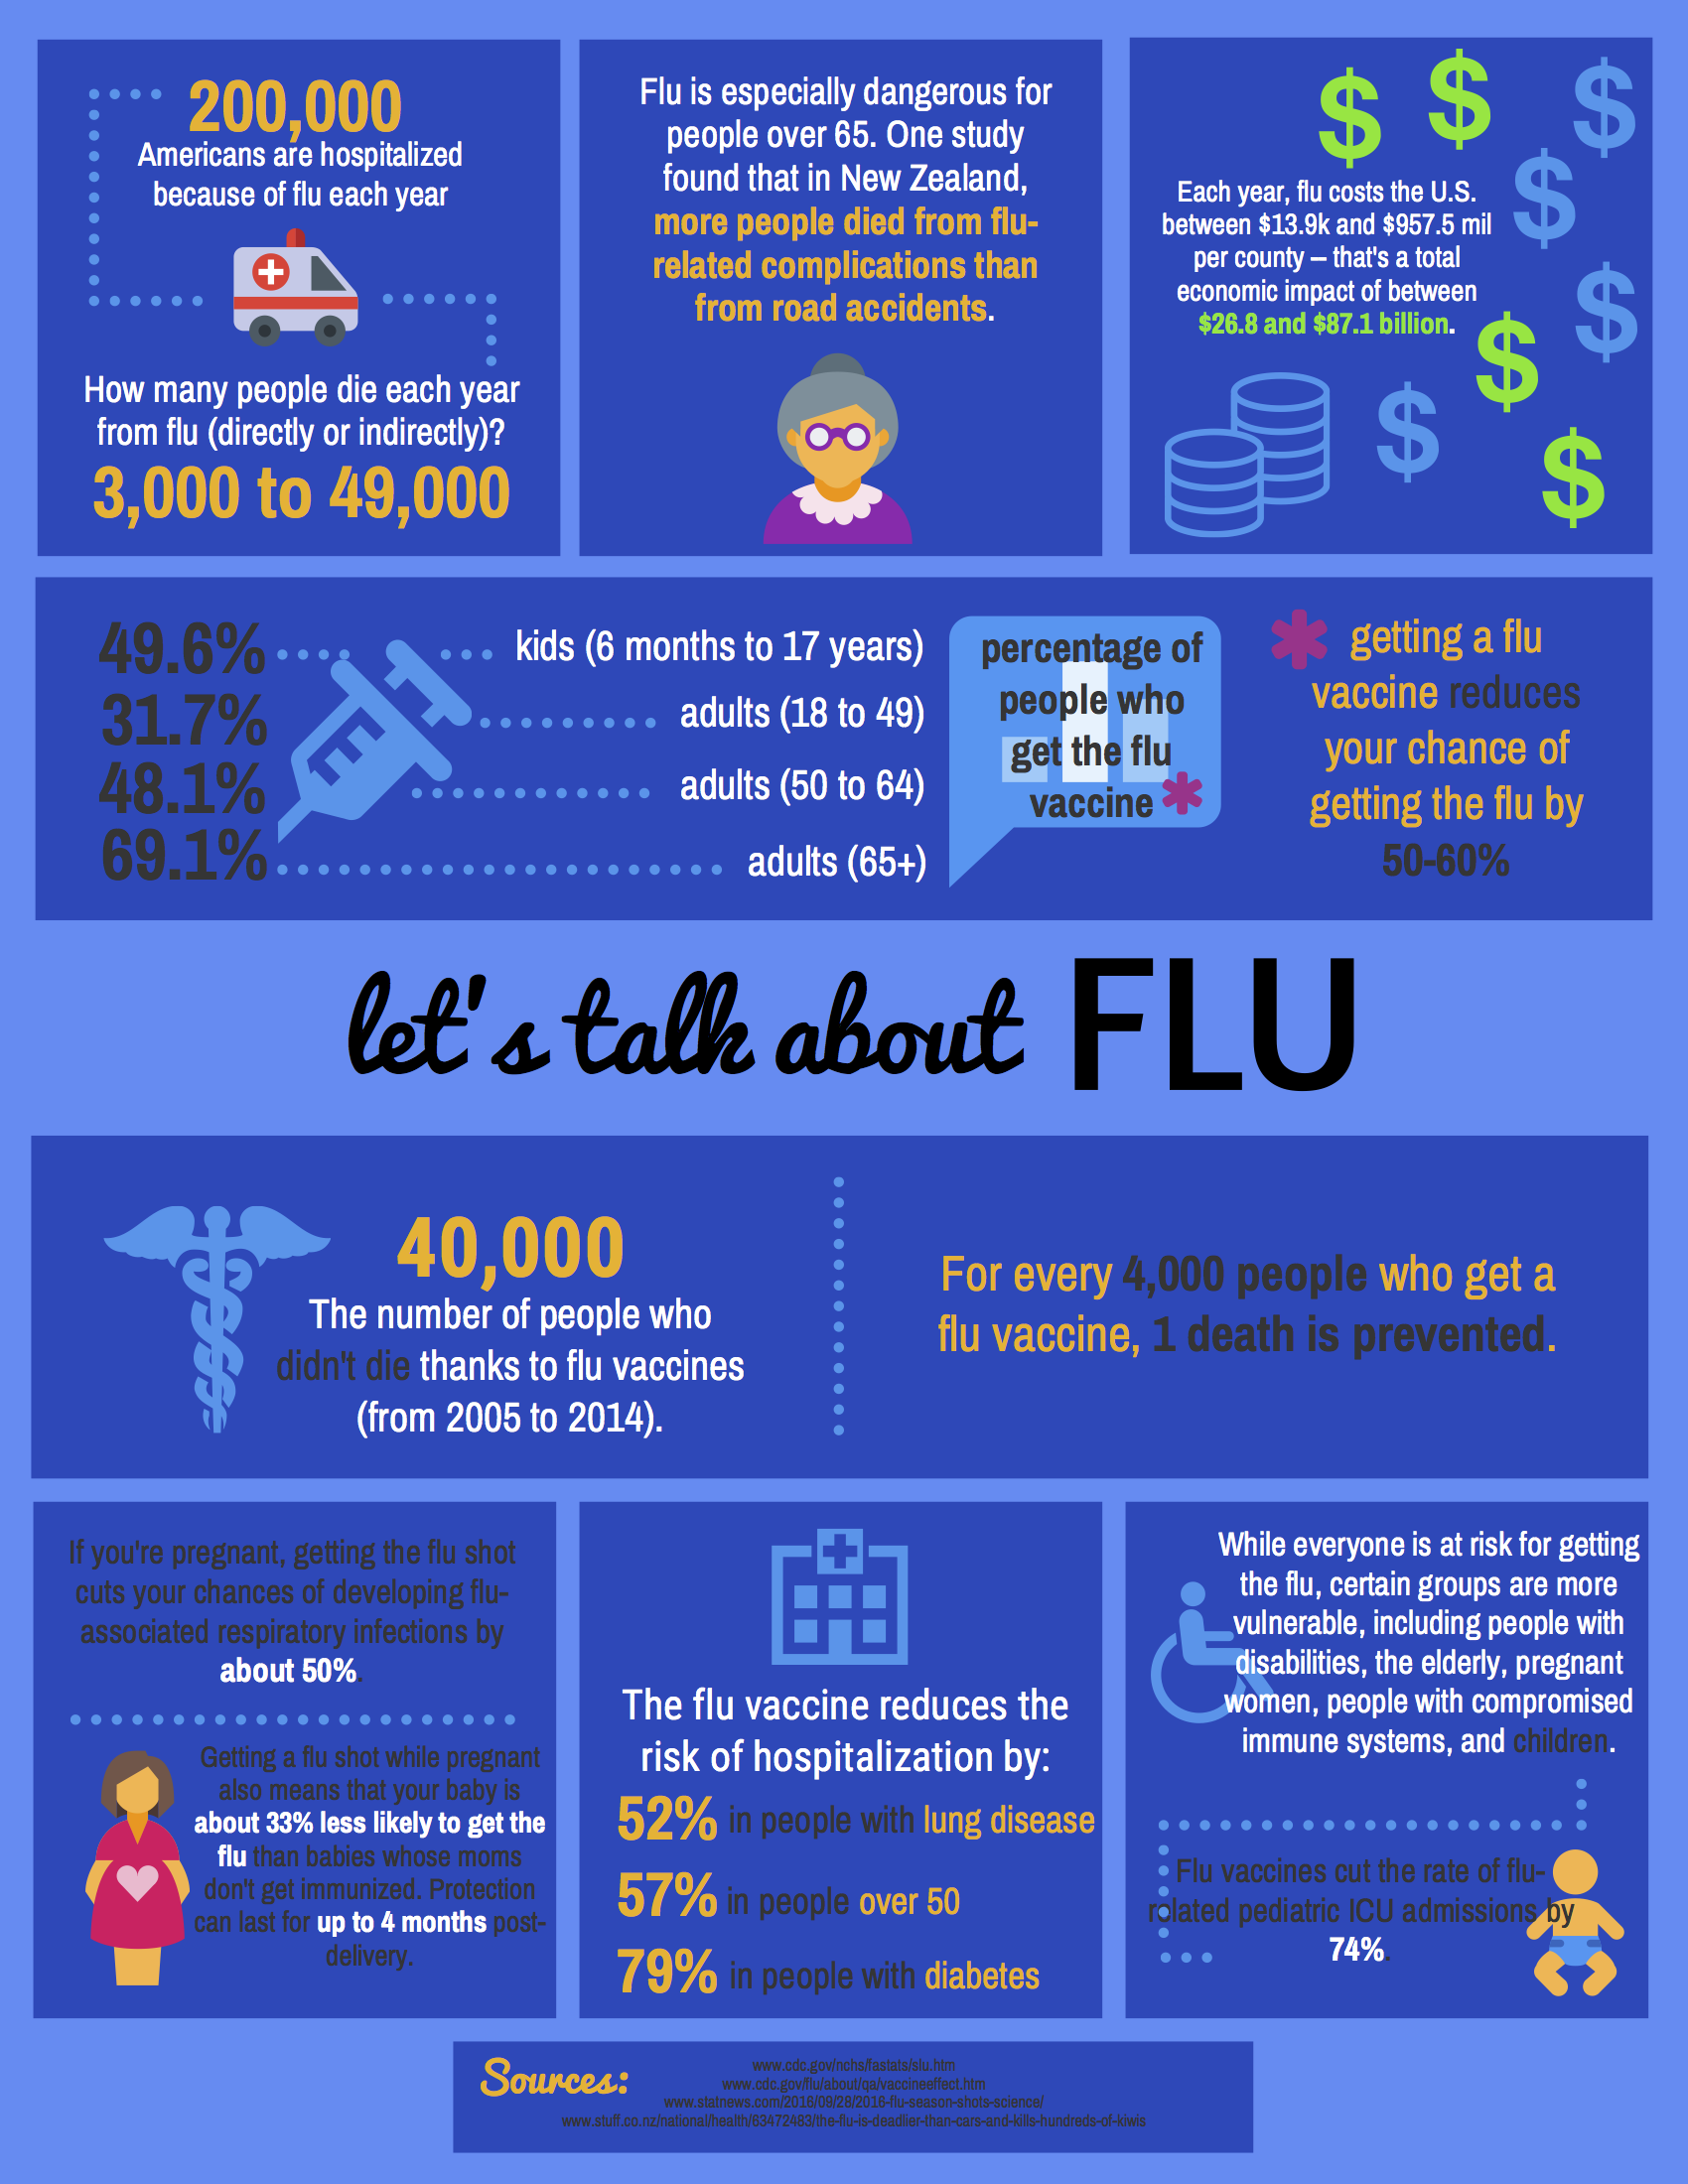 Let's talk about FLU